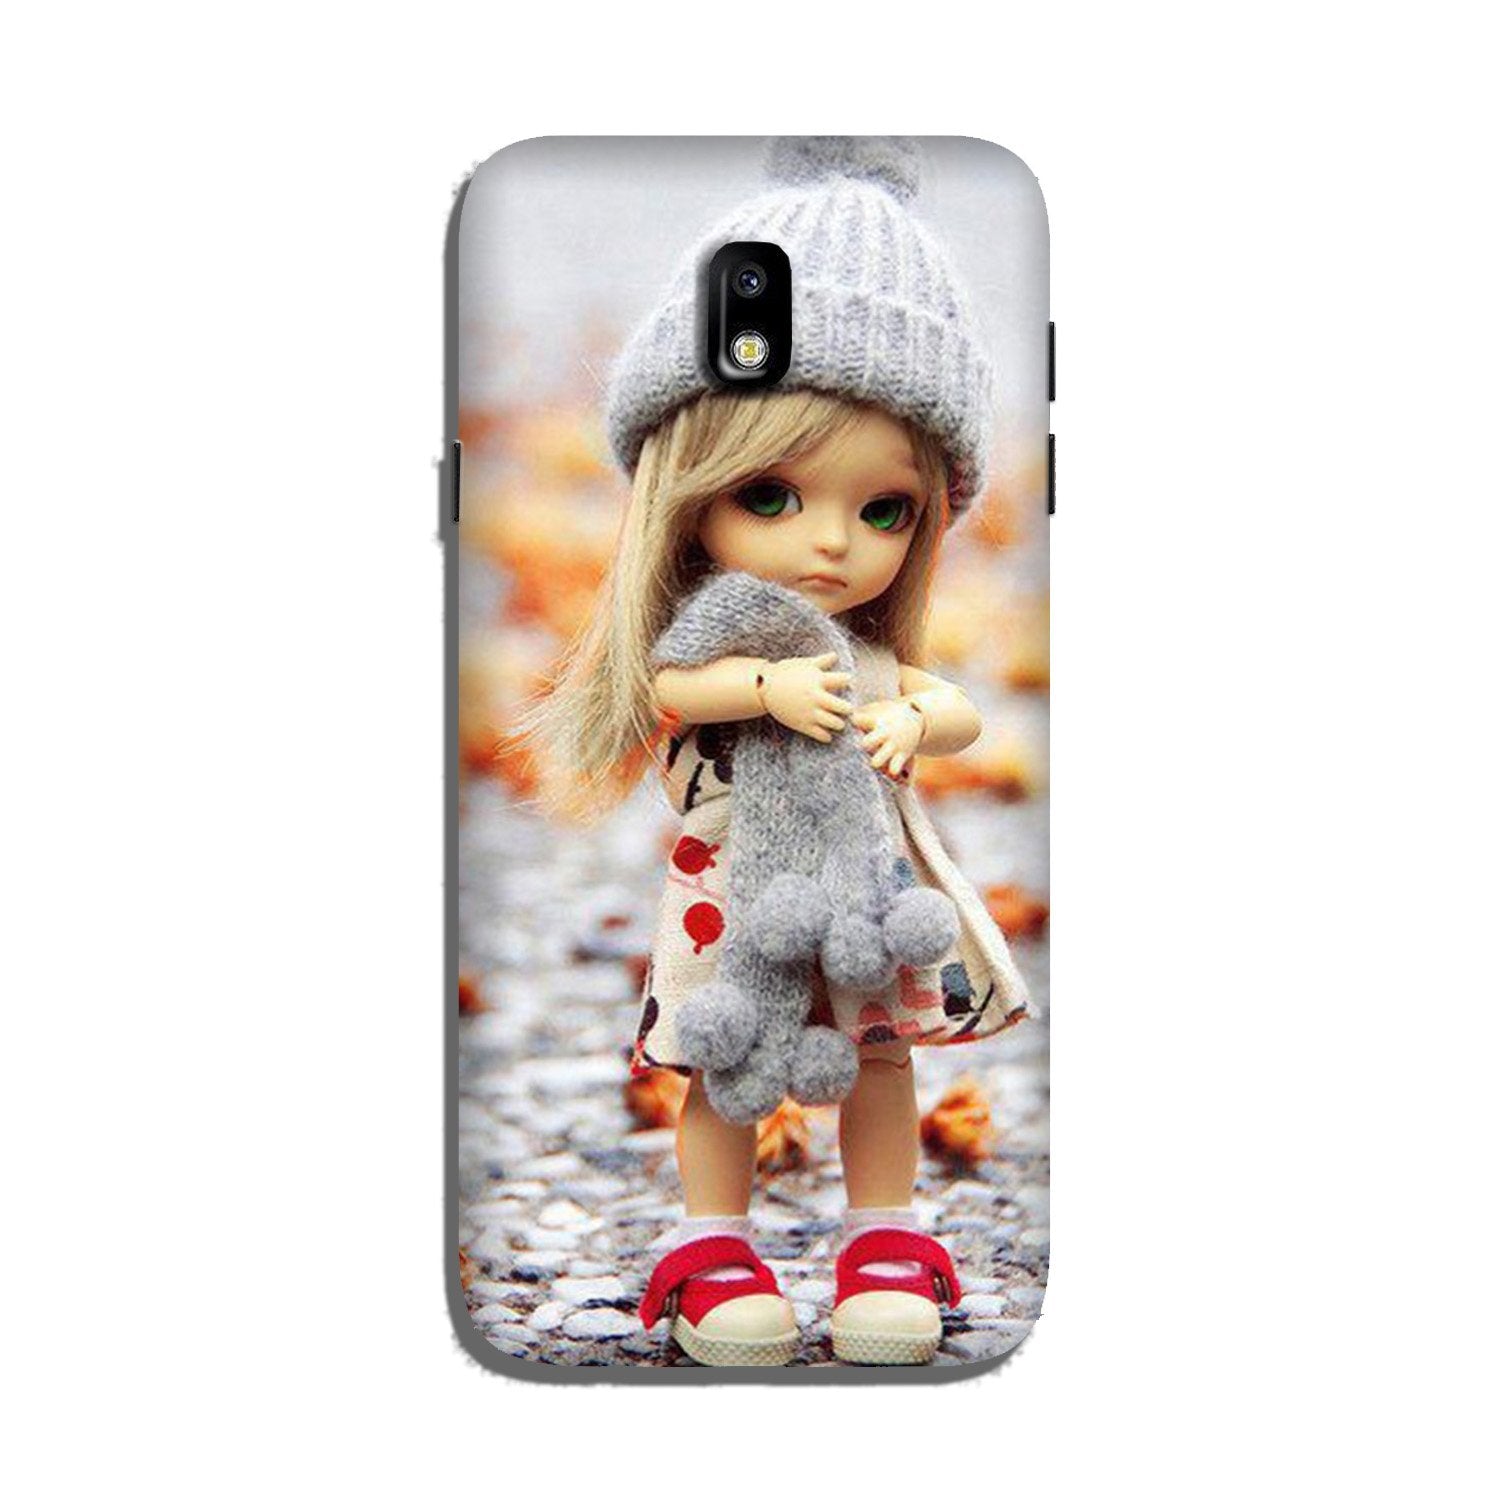 Cute Doll Case for Galaxy J7 Pro